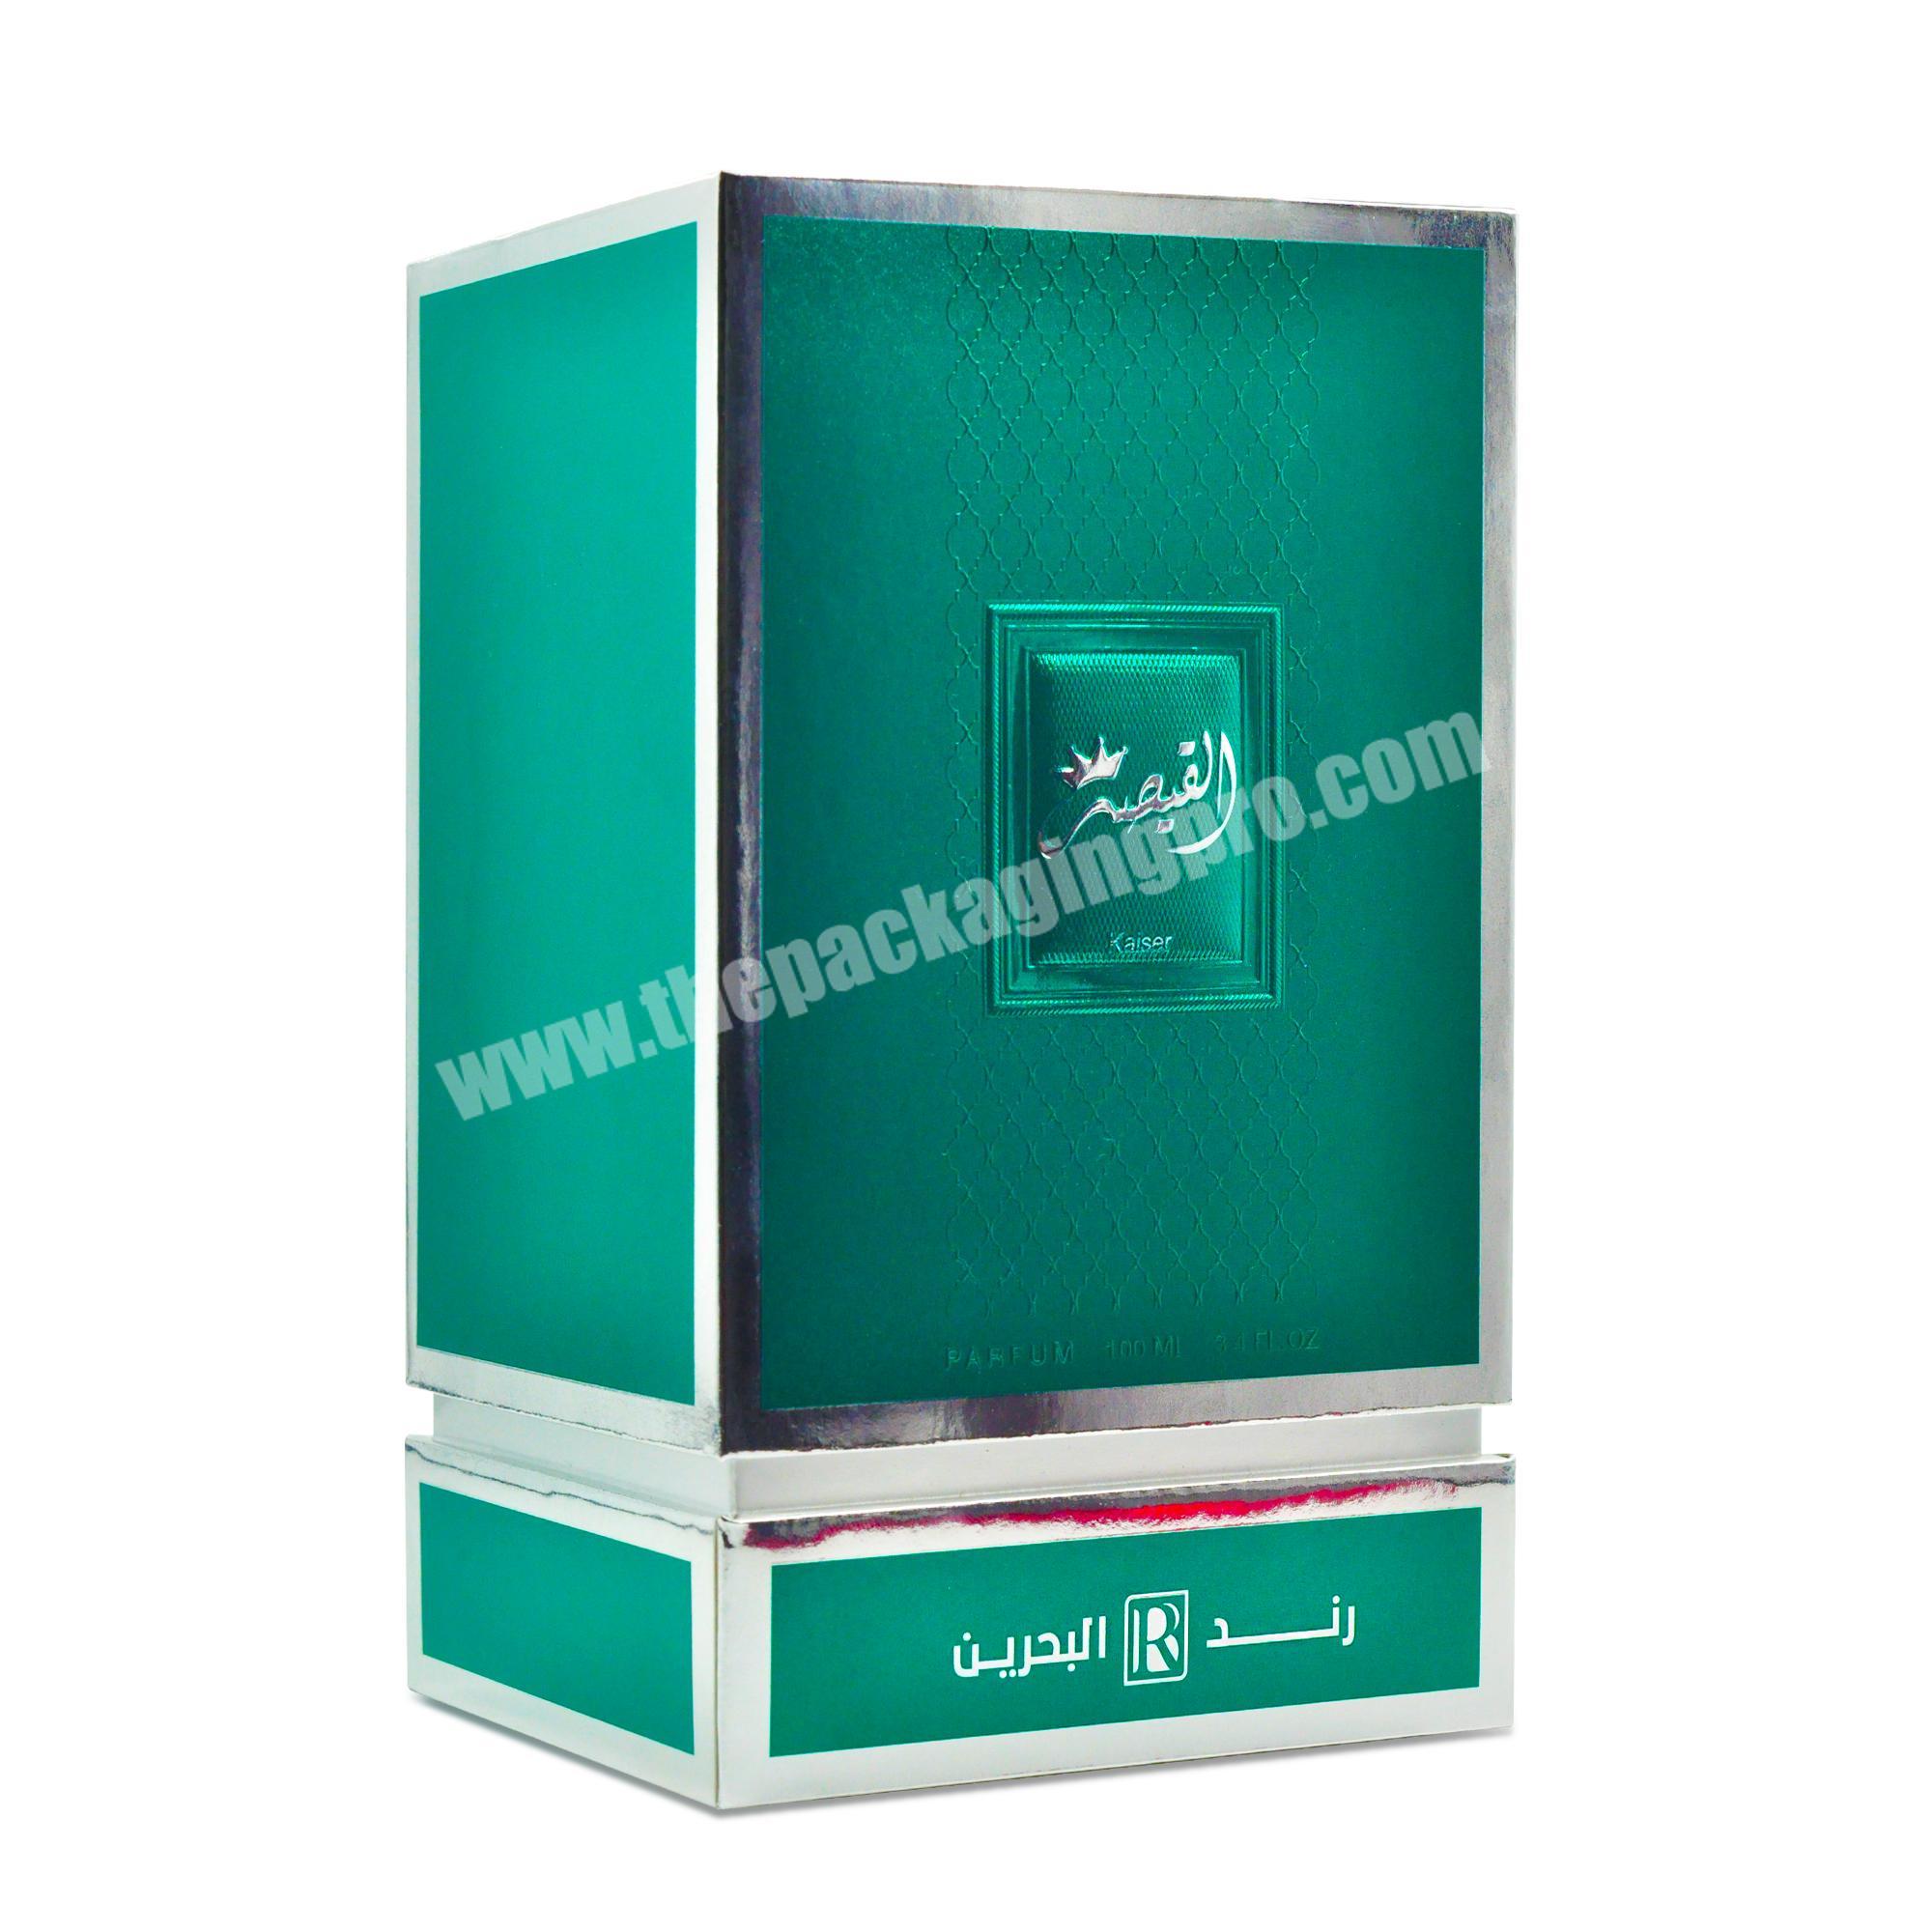 perfume cardboard box mailing gift box pack storage box